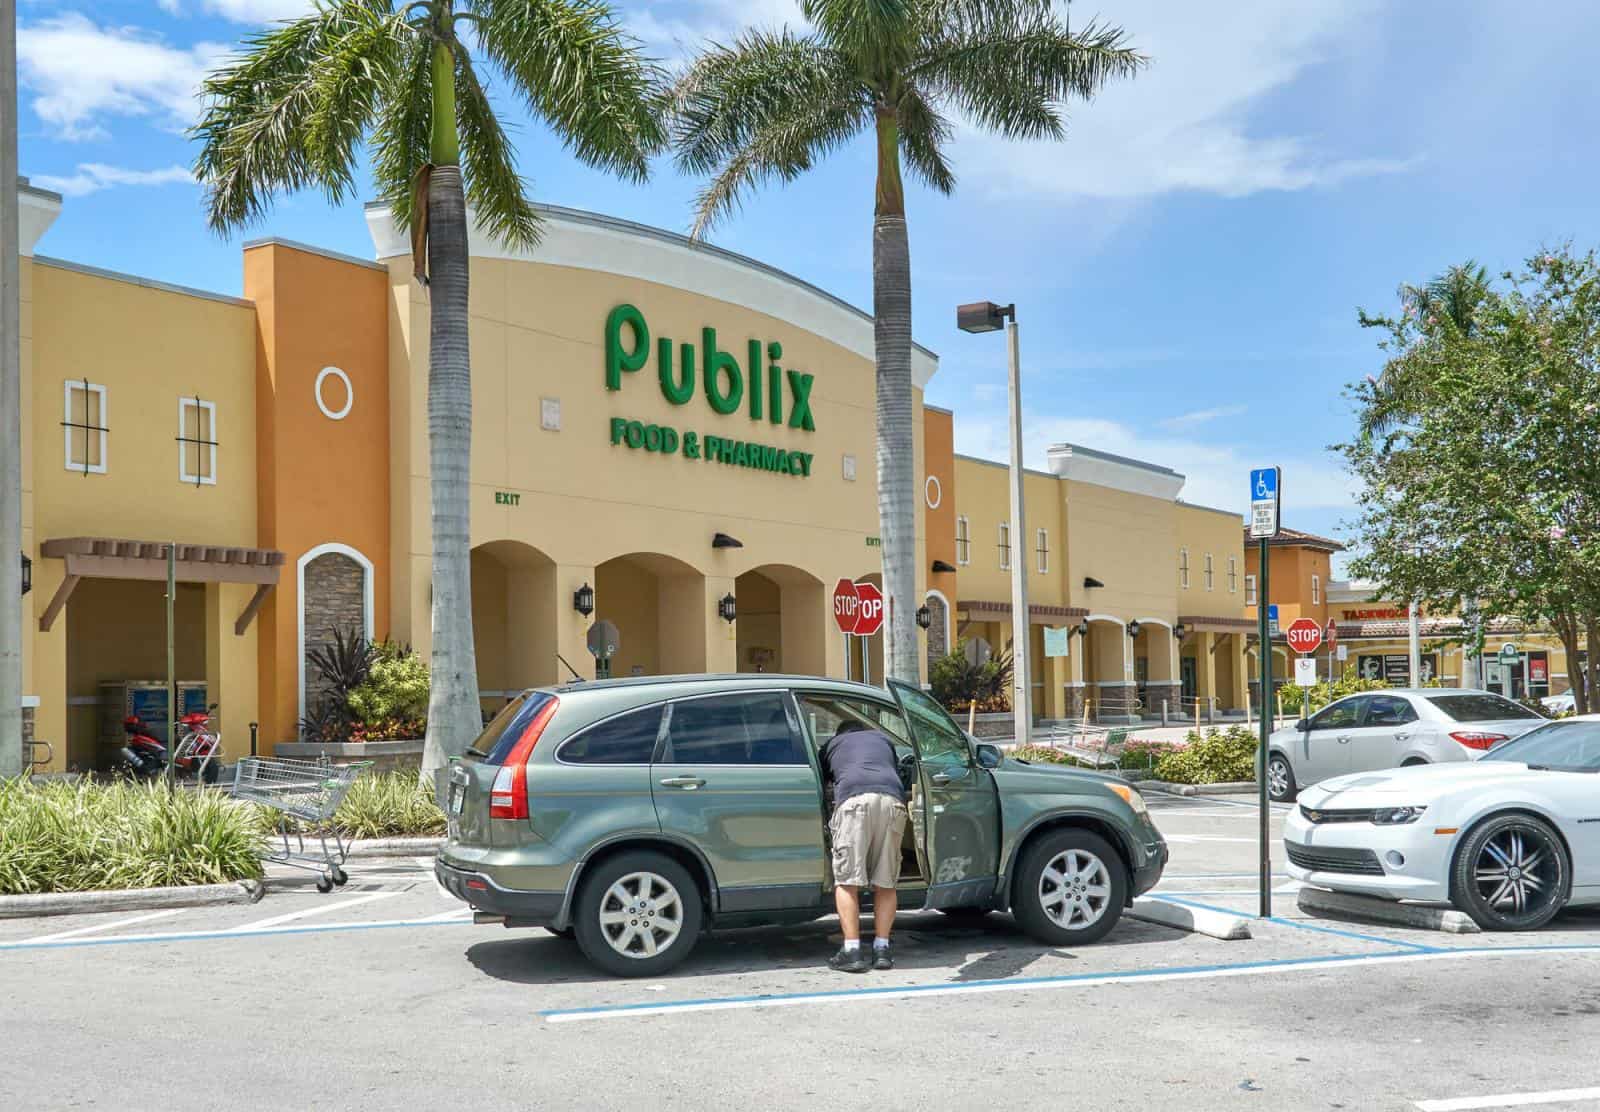 Publix - Supermarkets Near Universal STudios / Best Supermarkets Near Disney World